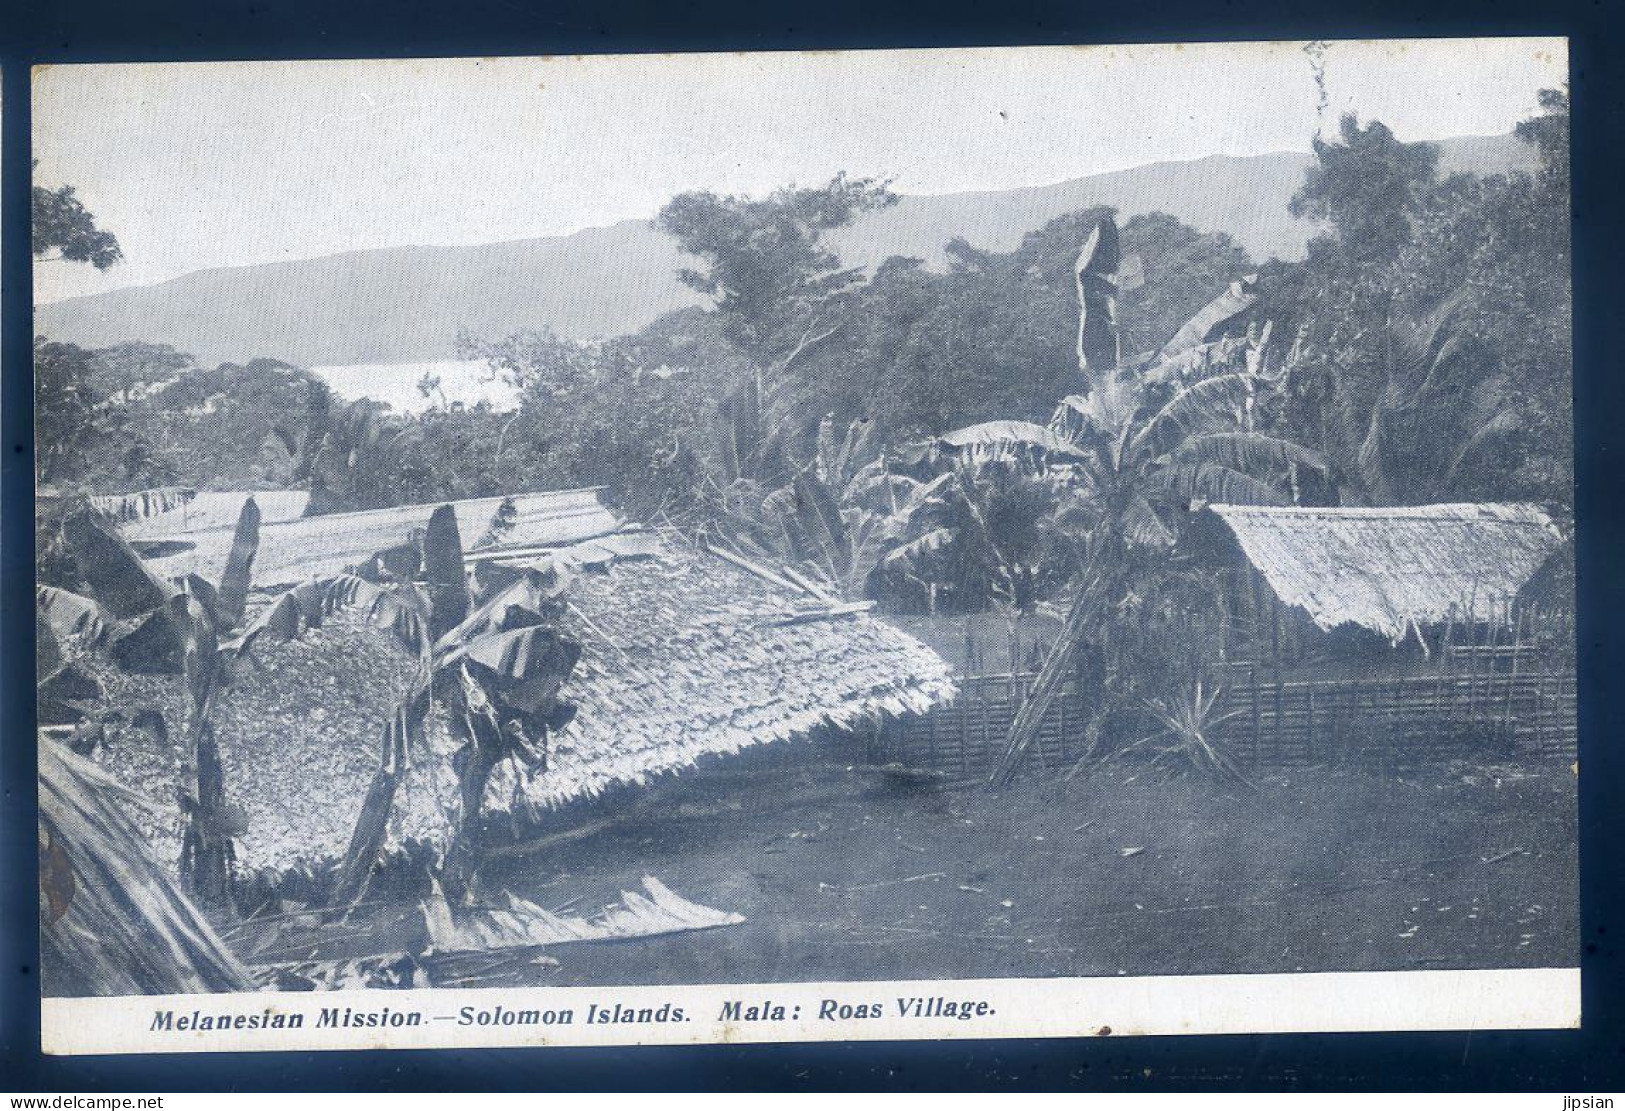 Cpa Océanie -- Melanesian Mission - Solomon Islands -  Mala , Roas Village  -- Les ïles Salomon   LANR65 - Solomoneilanden